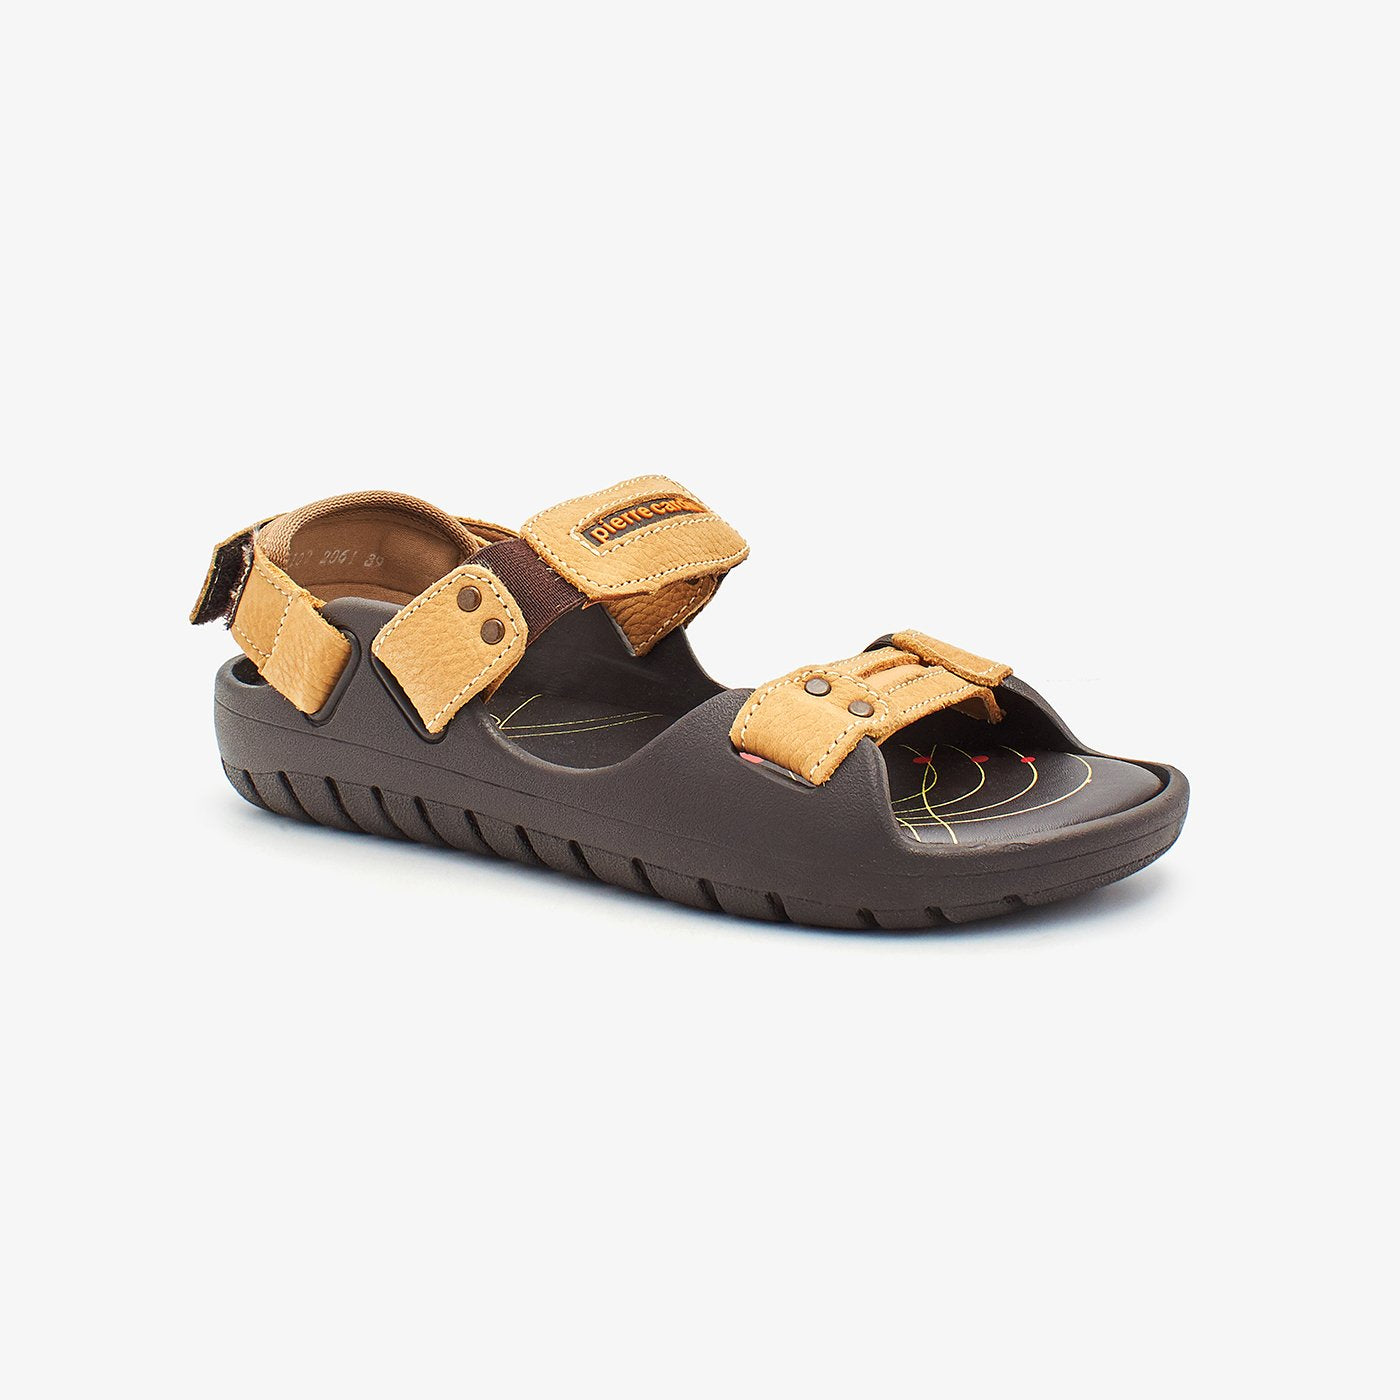 Comfortable Sandals for Men